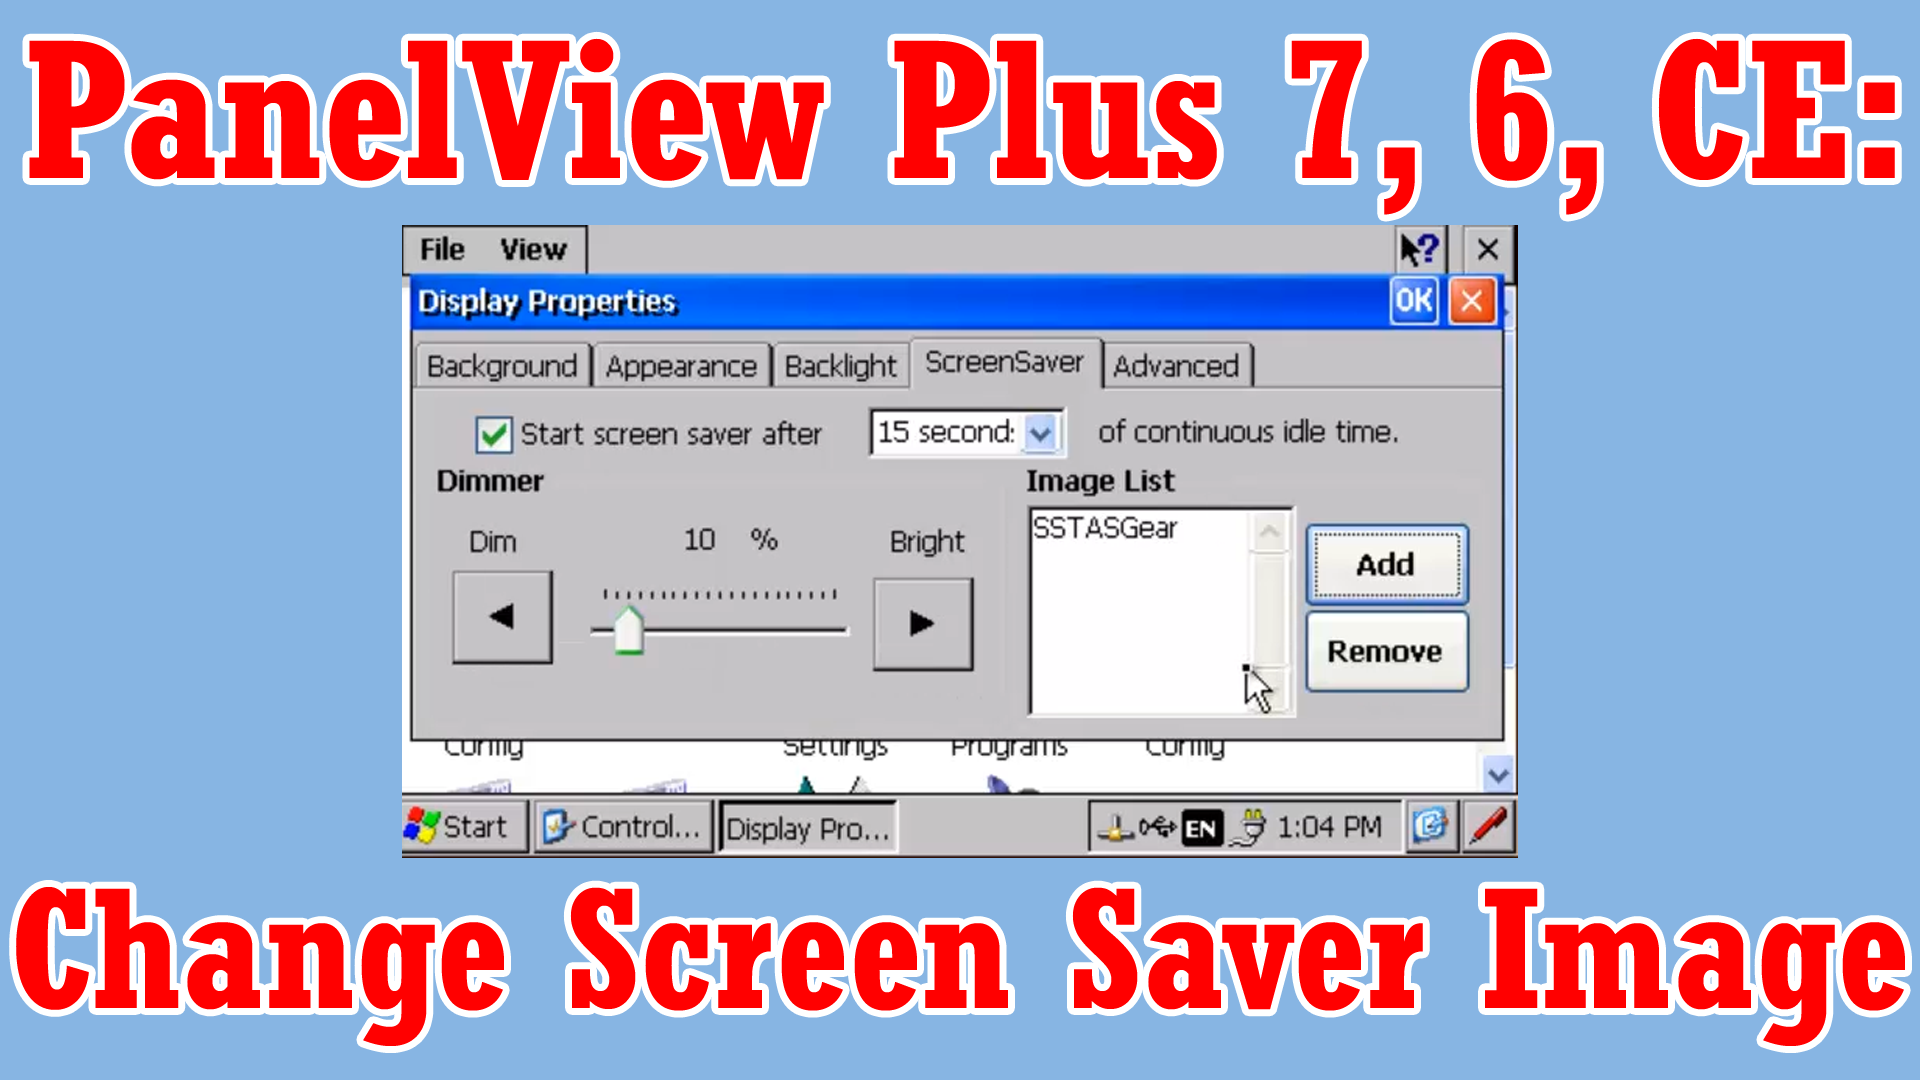 PanelView Plus 7, 6, CE - Changing Screen Saver Image (M4E39)